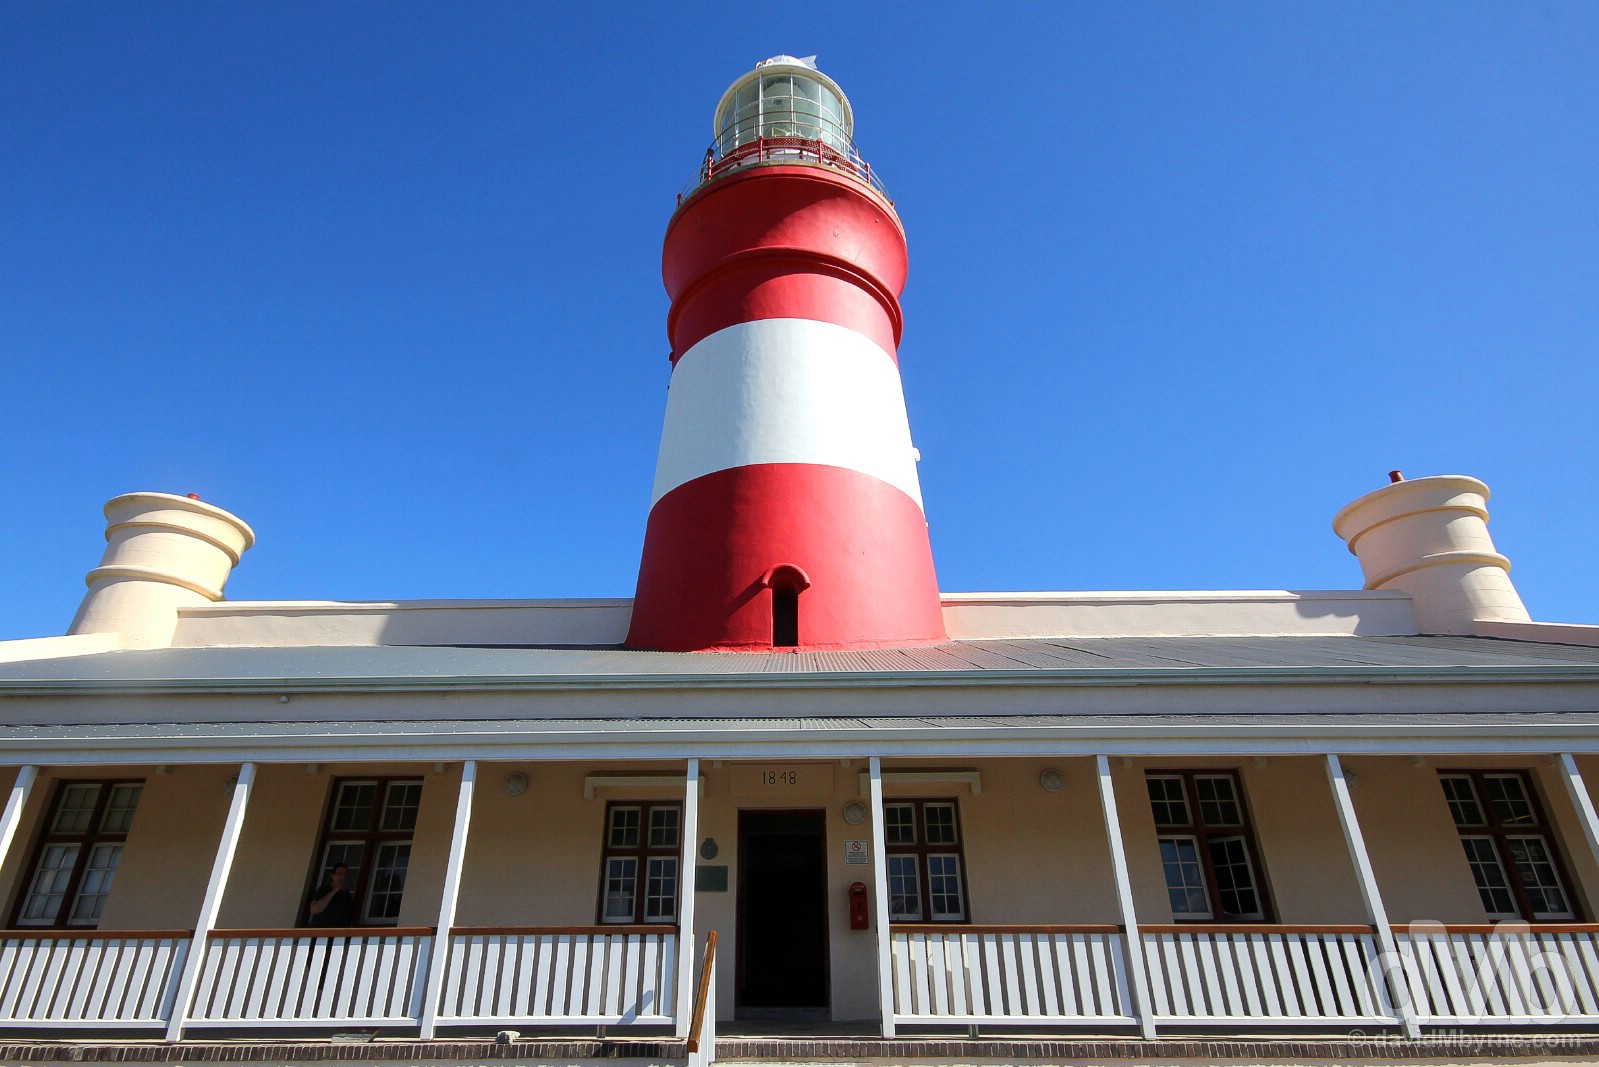 Cape Agulhas Lighthouse, Overberg, Western Cape, South Africa. February 21, 2016.